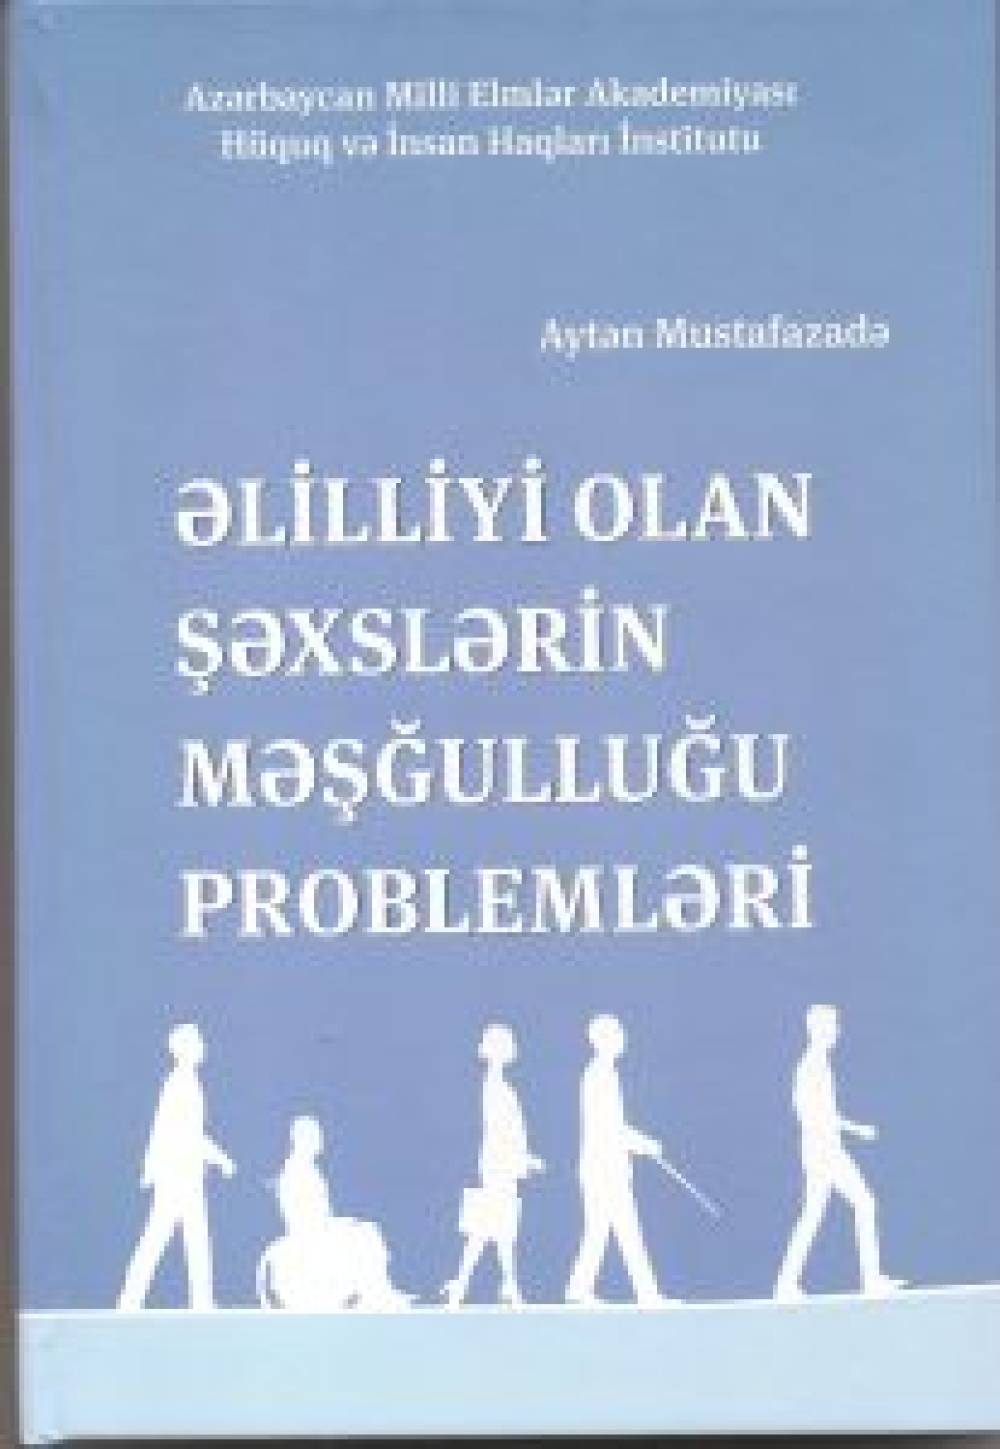 Ayten Mustafazade: "Problems of employment of people with disabilities"